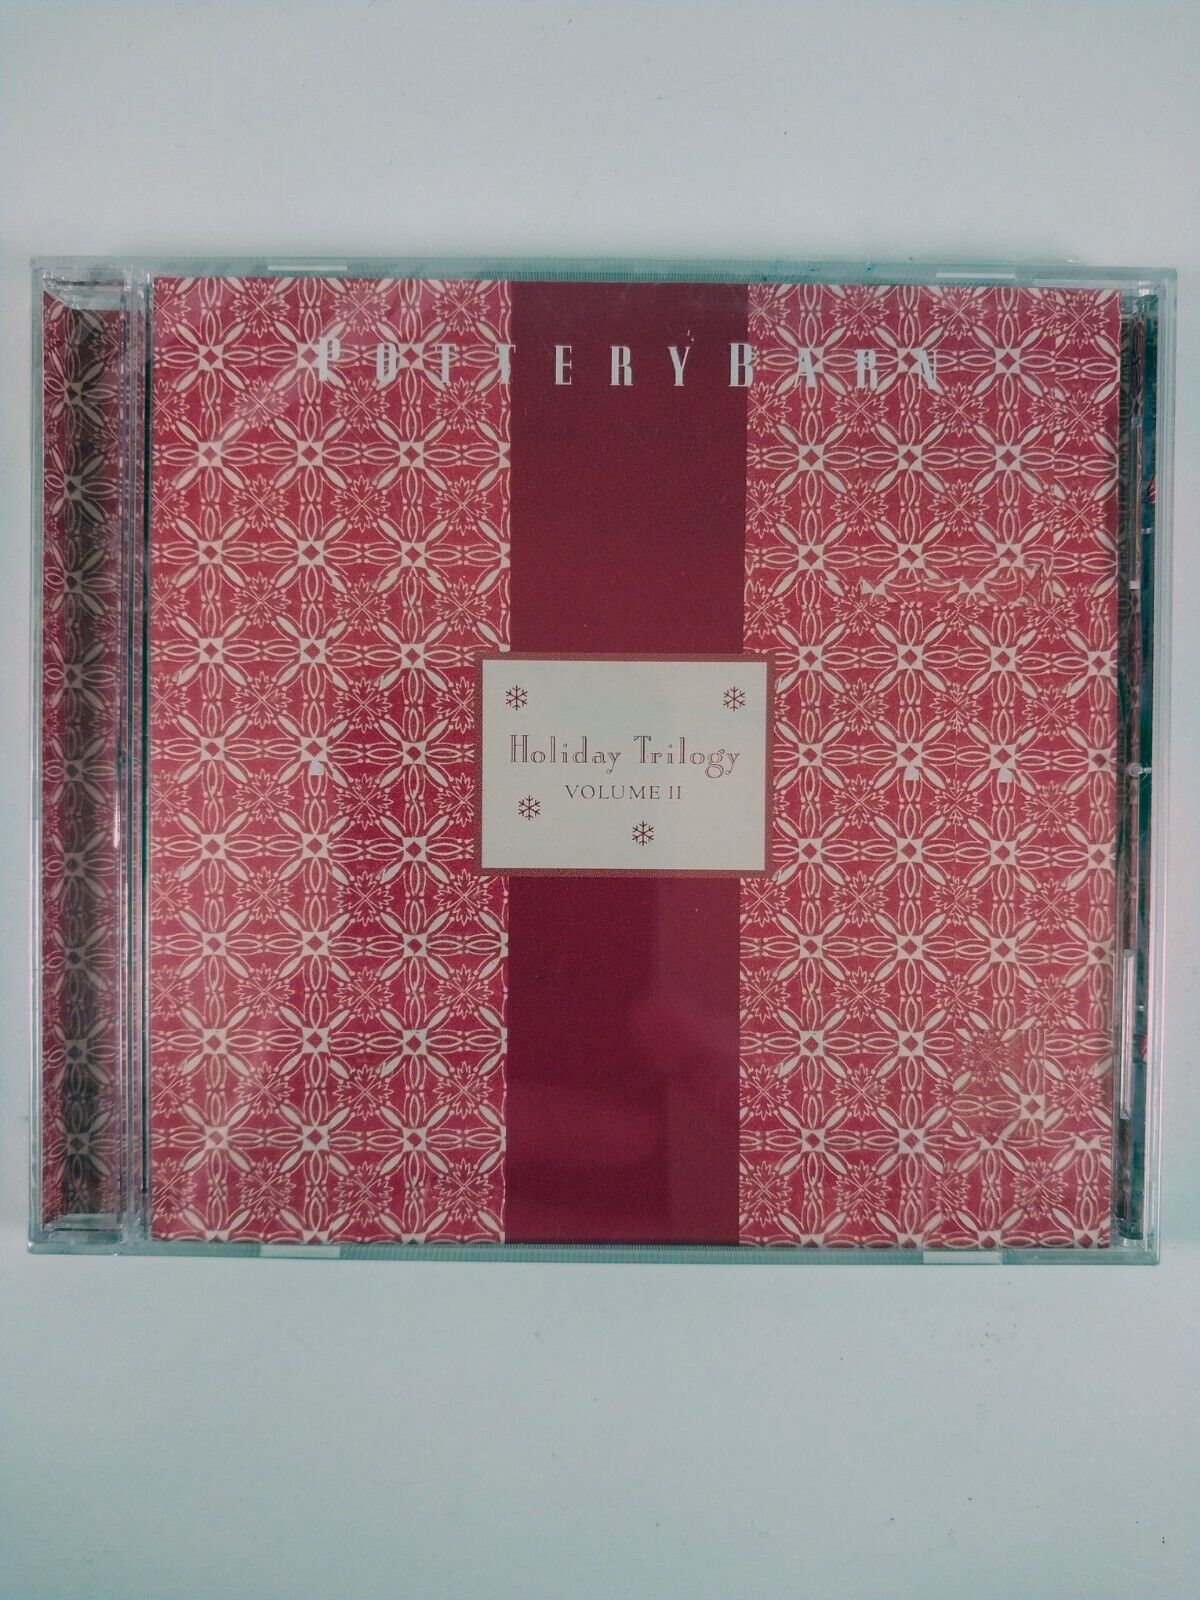 Pottery Barn Holiday Trilogy Volume II (2004, CD) PB0465 - Sealed